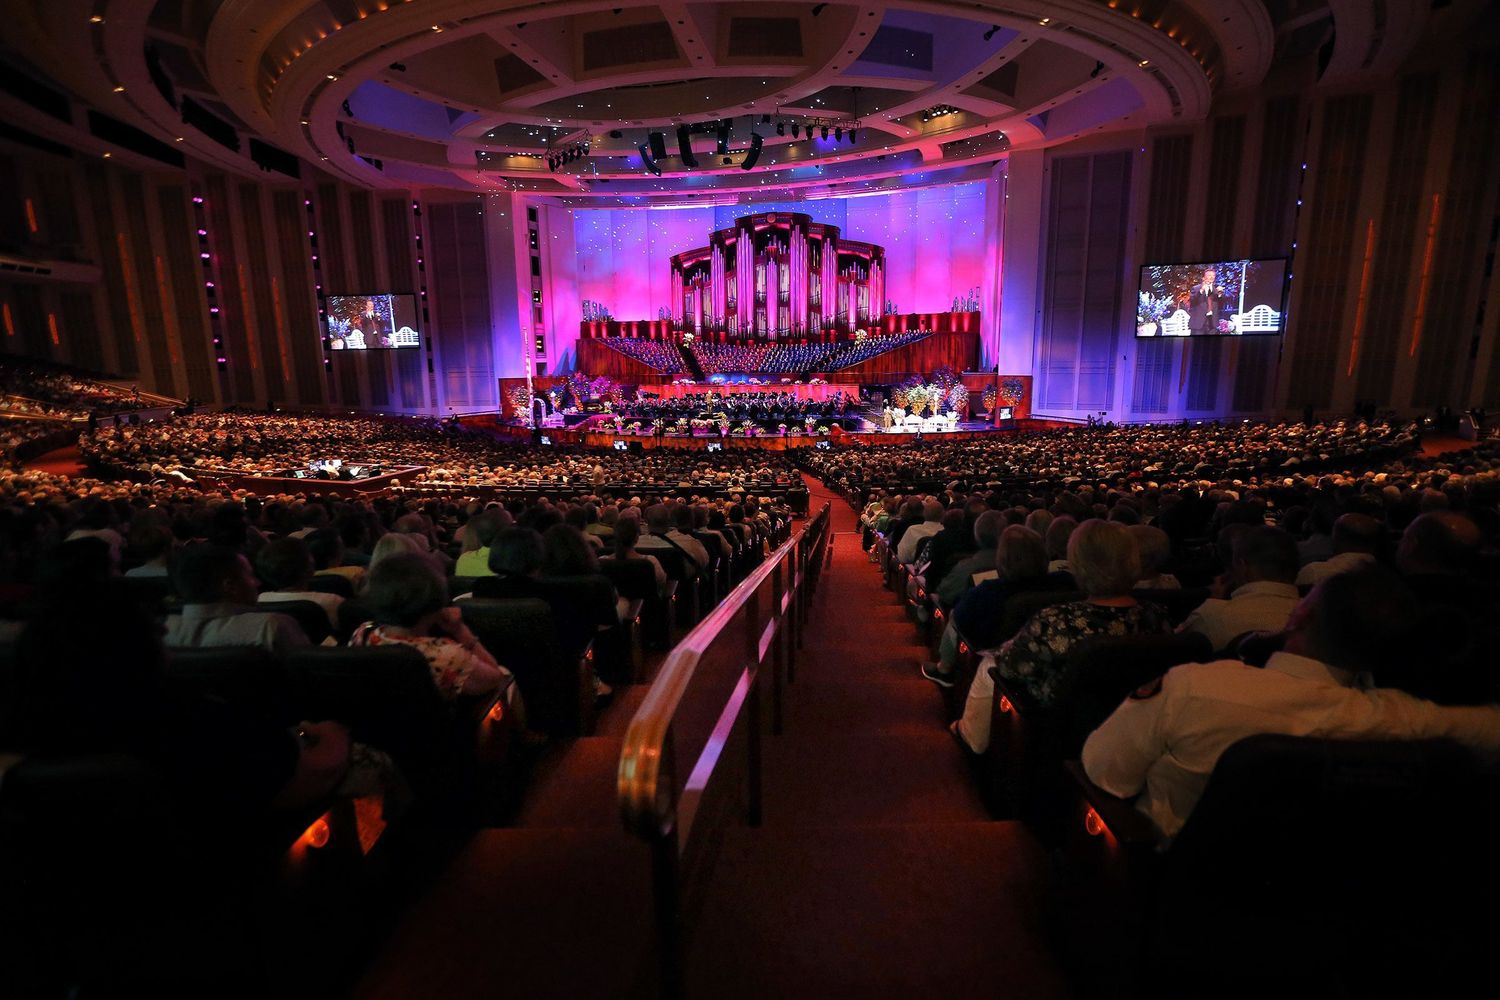 How Long Is Mormon Tabernacle Choir Performance At Benaroya Hall?